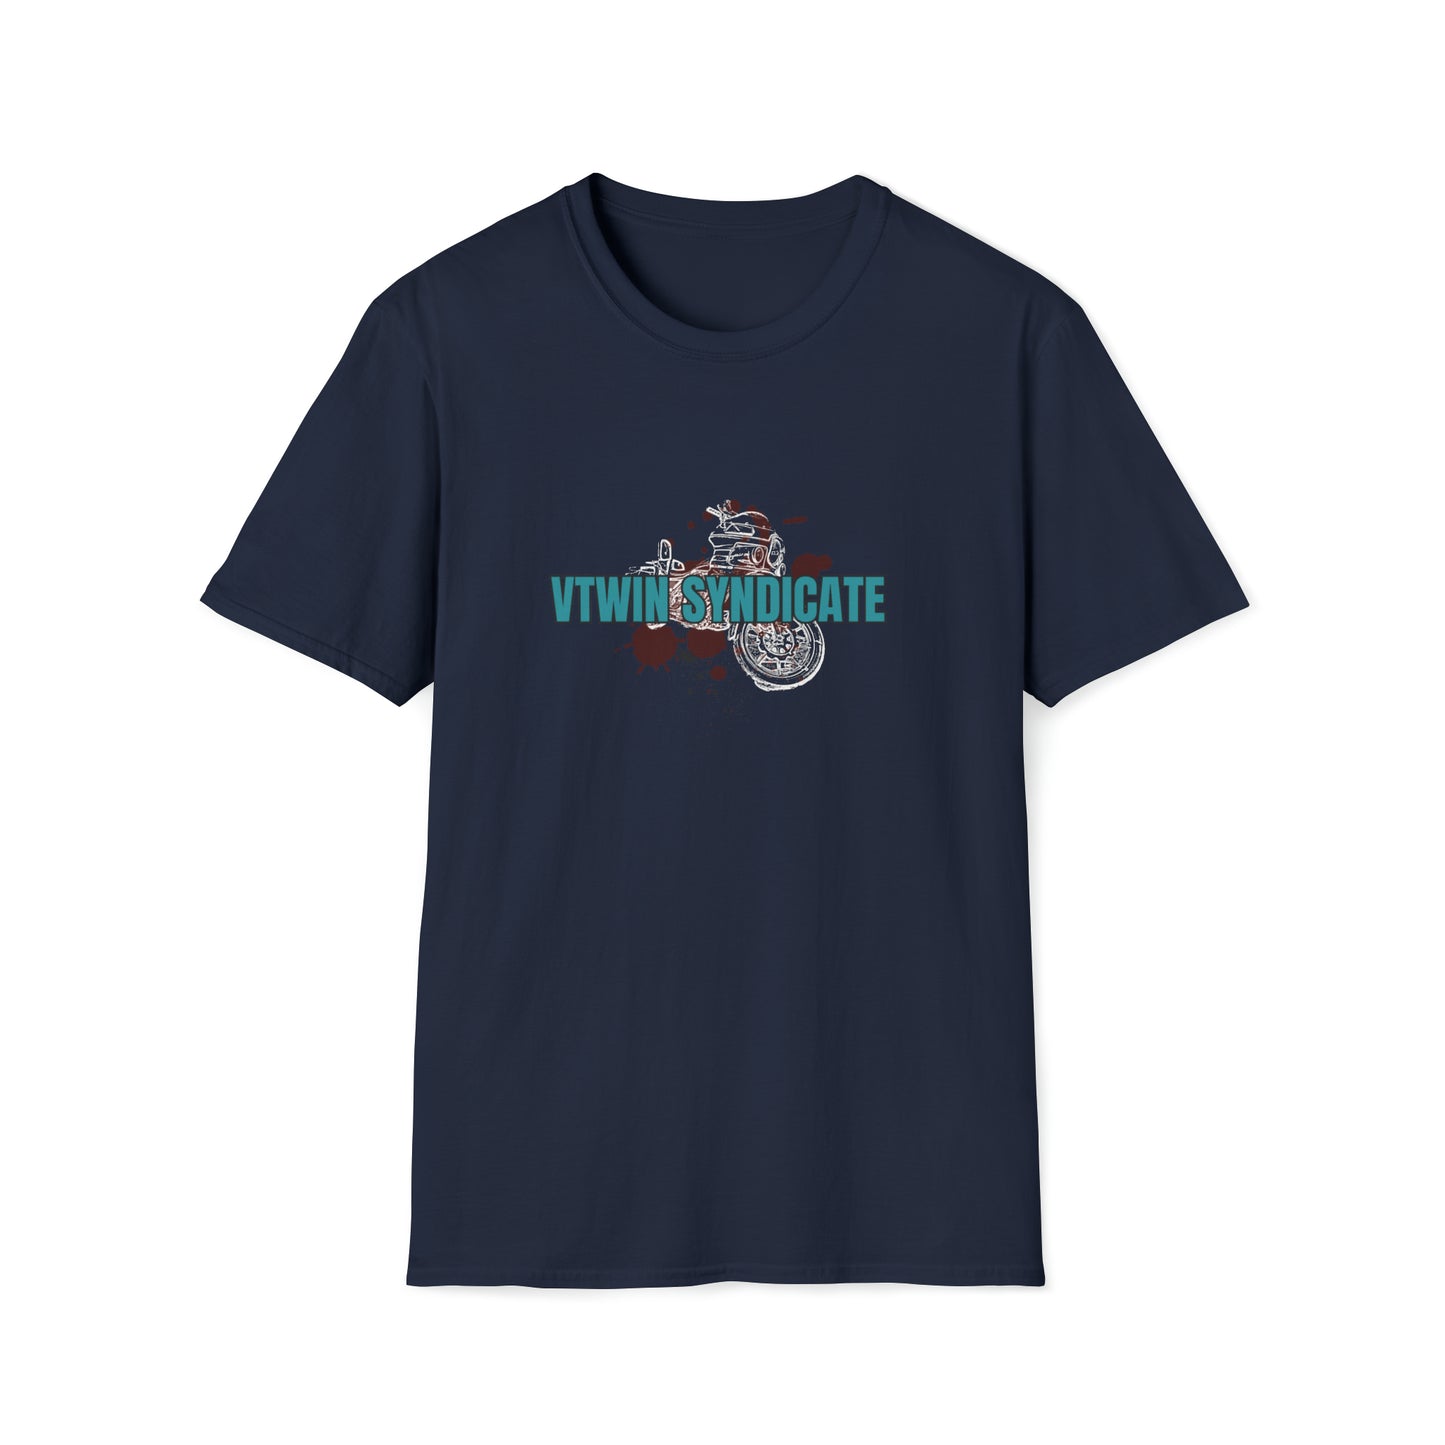 Harley FXRT Tshirt - Vtwin Syndicate - Harley Davidson Blue maroon - UNISEX